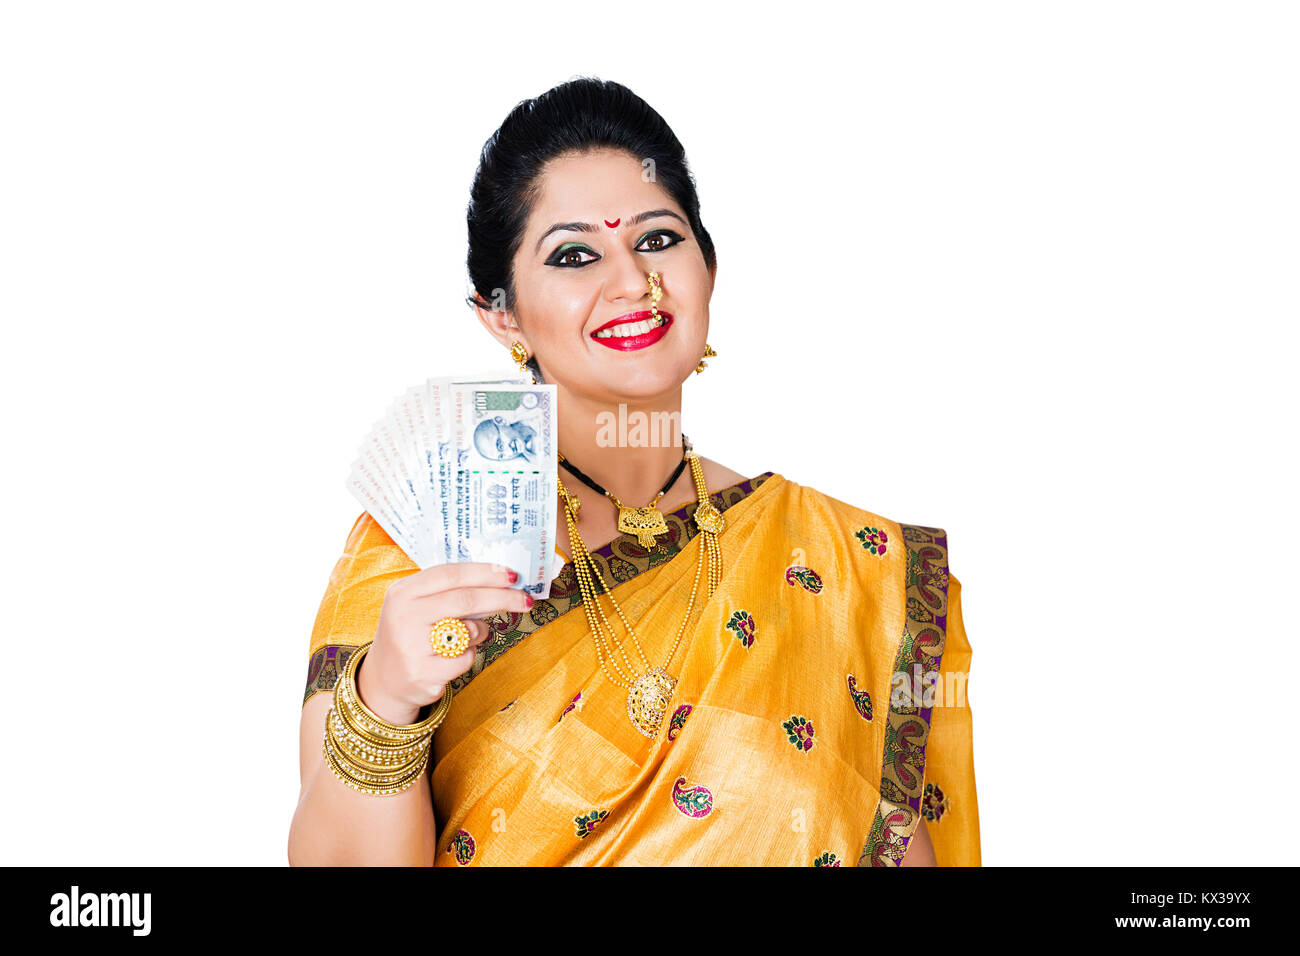 Indian Traditional Marathi Woman Showing Rupess Note Saving Money Stock Photo